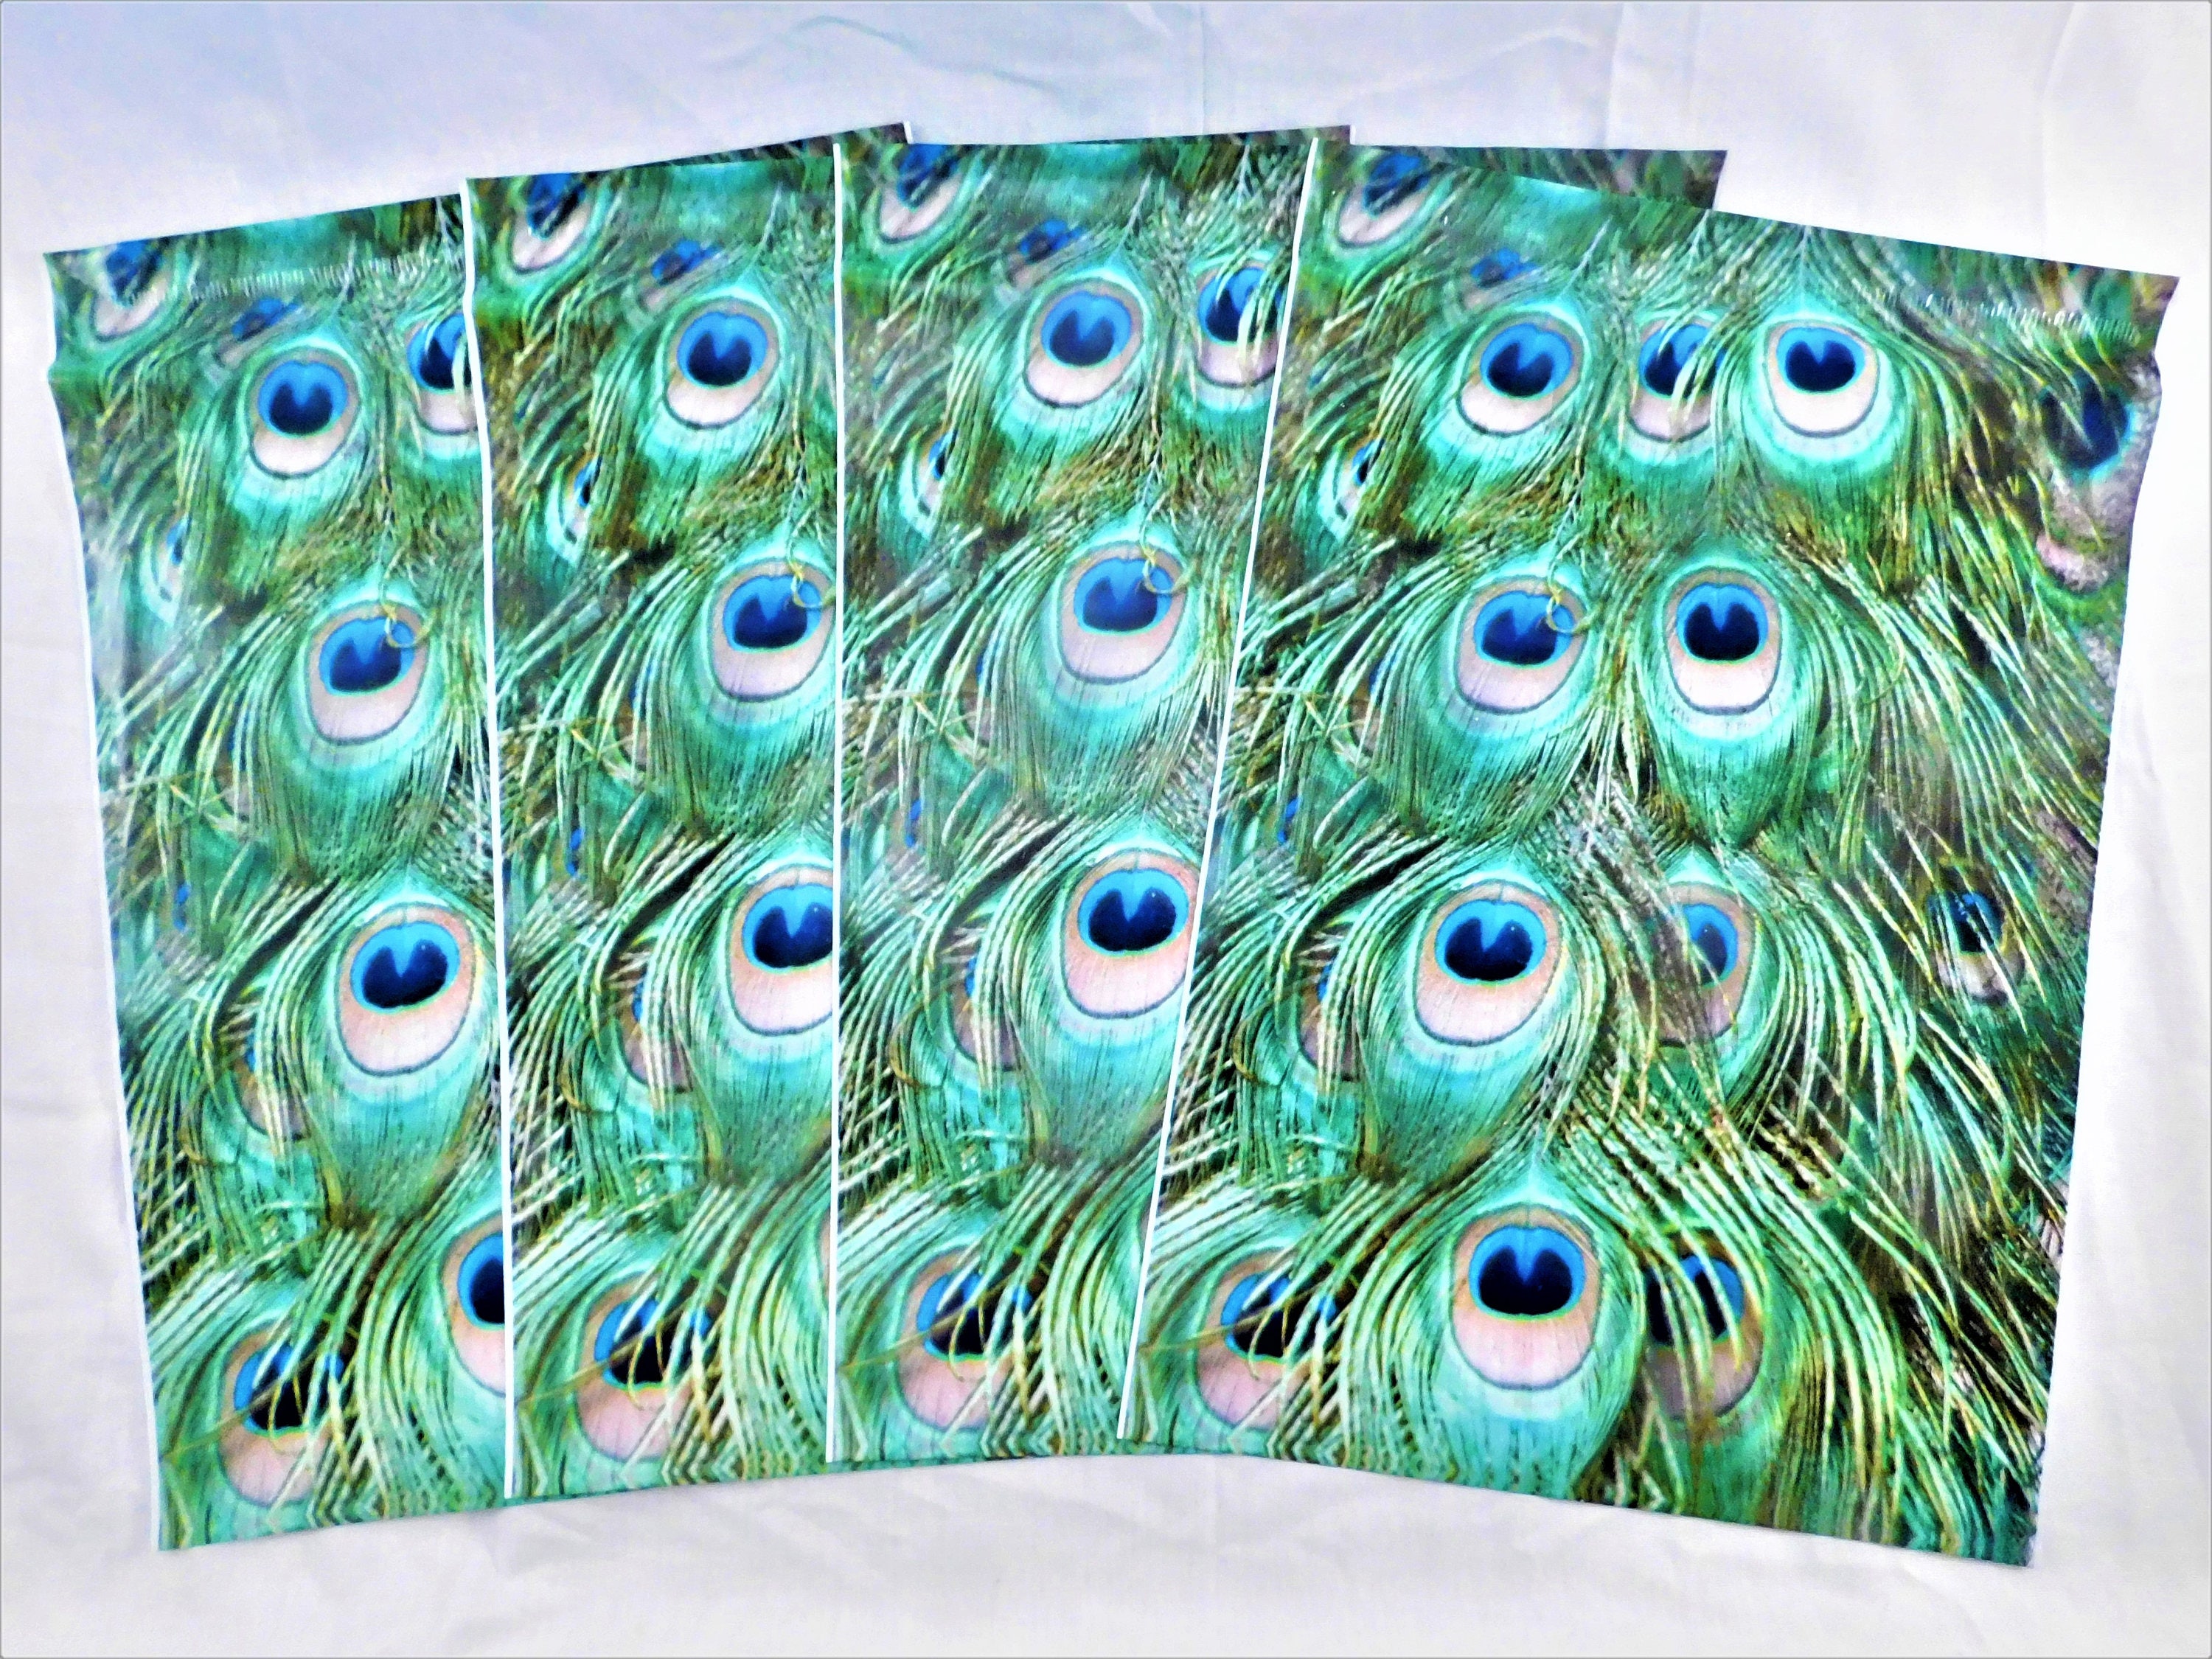 Peacock Envelope-Maker - plexi - Schleiper - Complete online catalogue